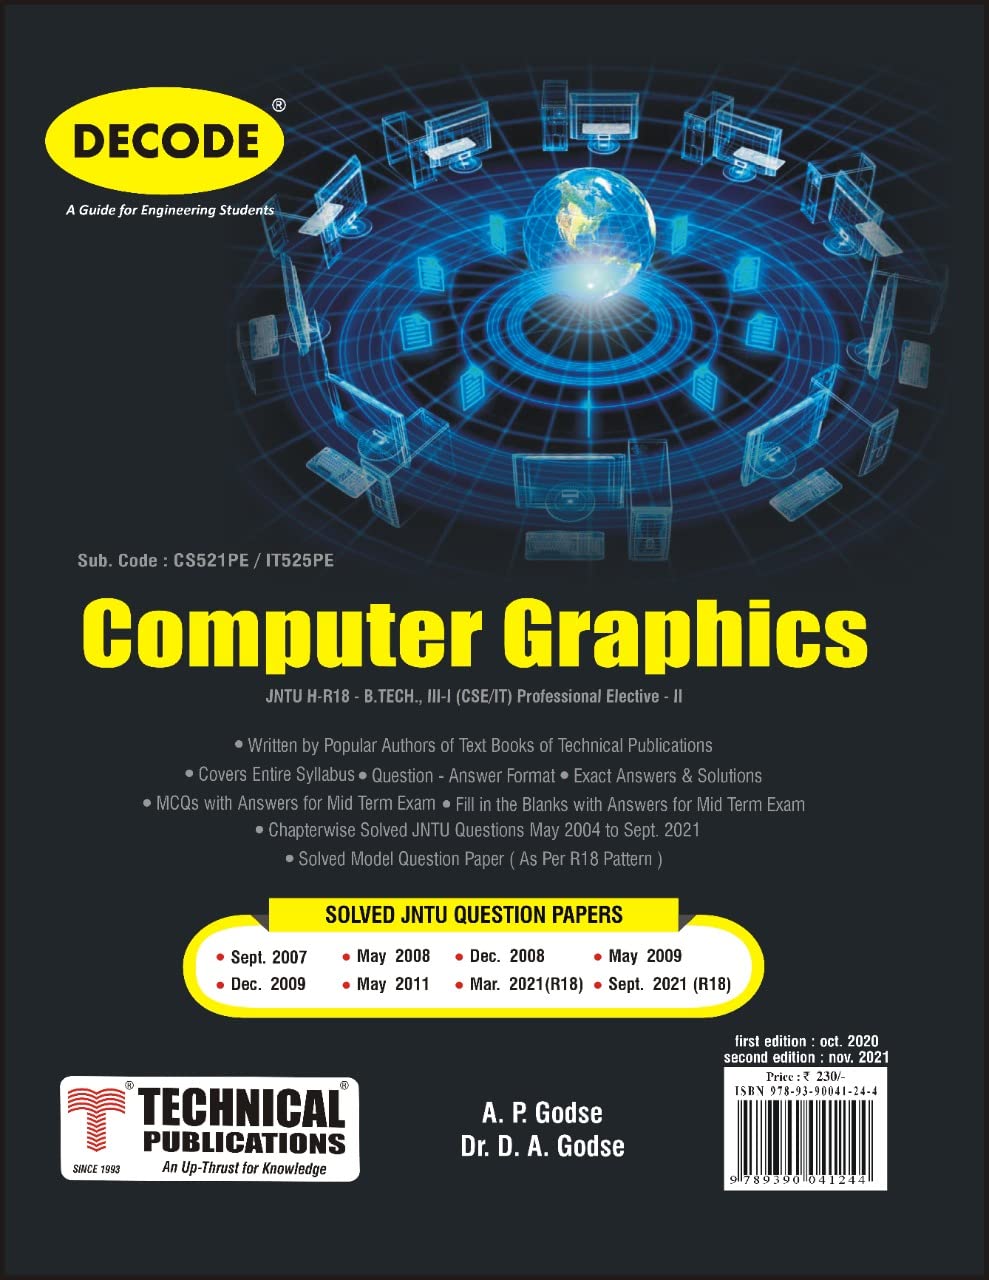 Computer Graphics for JNTU-H 18 Course (III - I - CSE/IT/Prof.  –  Technical Publications